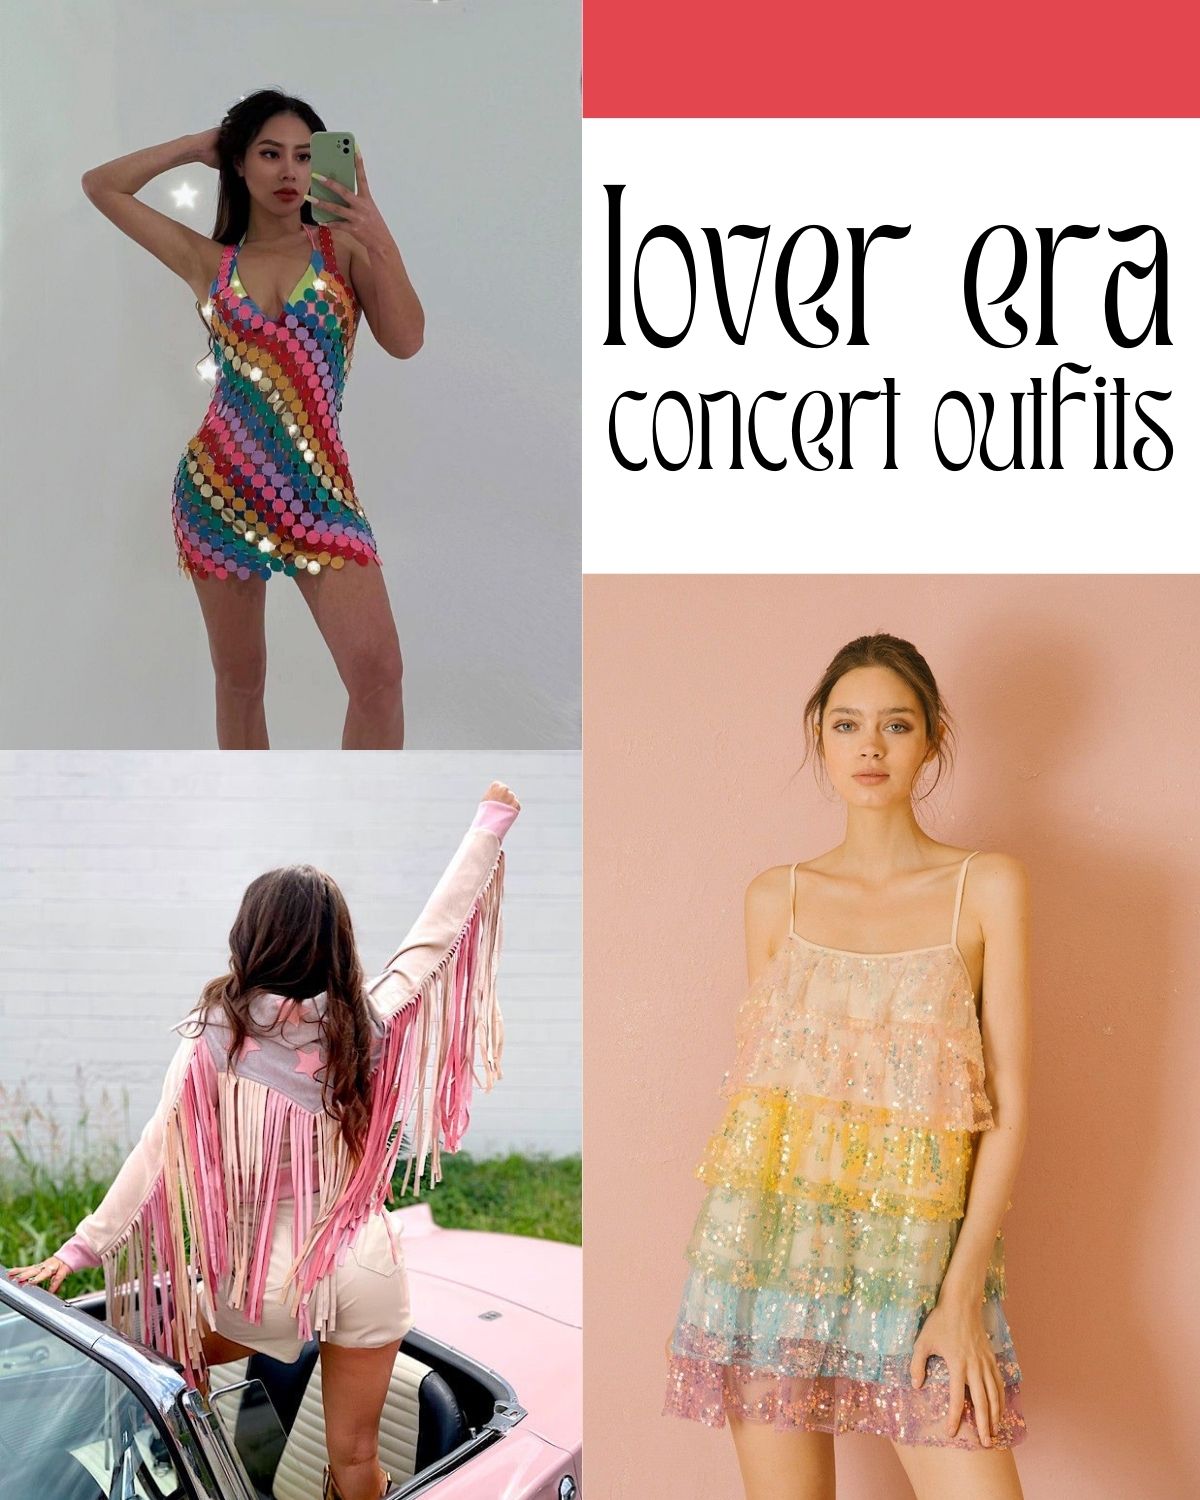 Concert outfit ideas